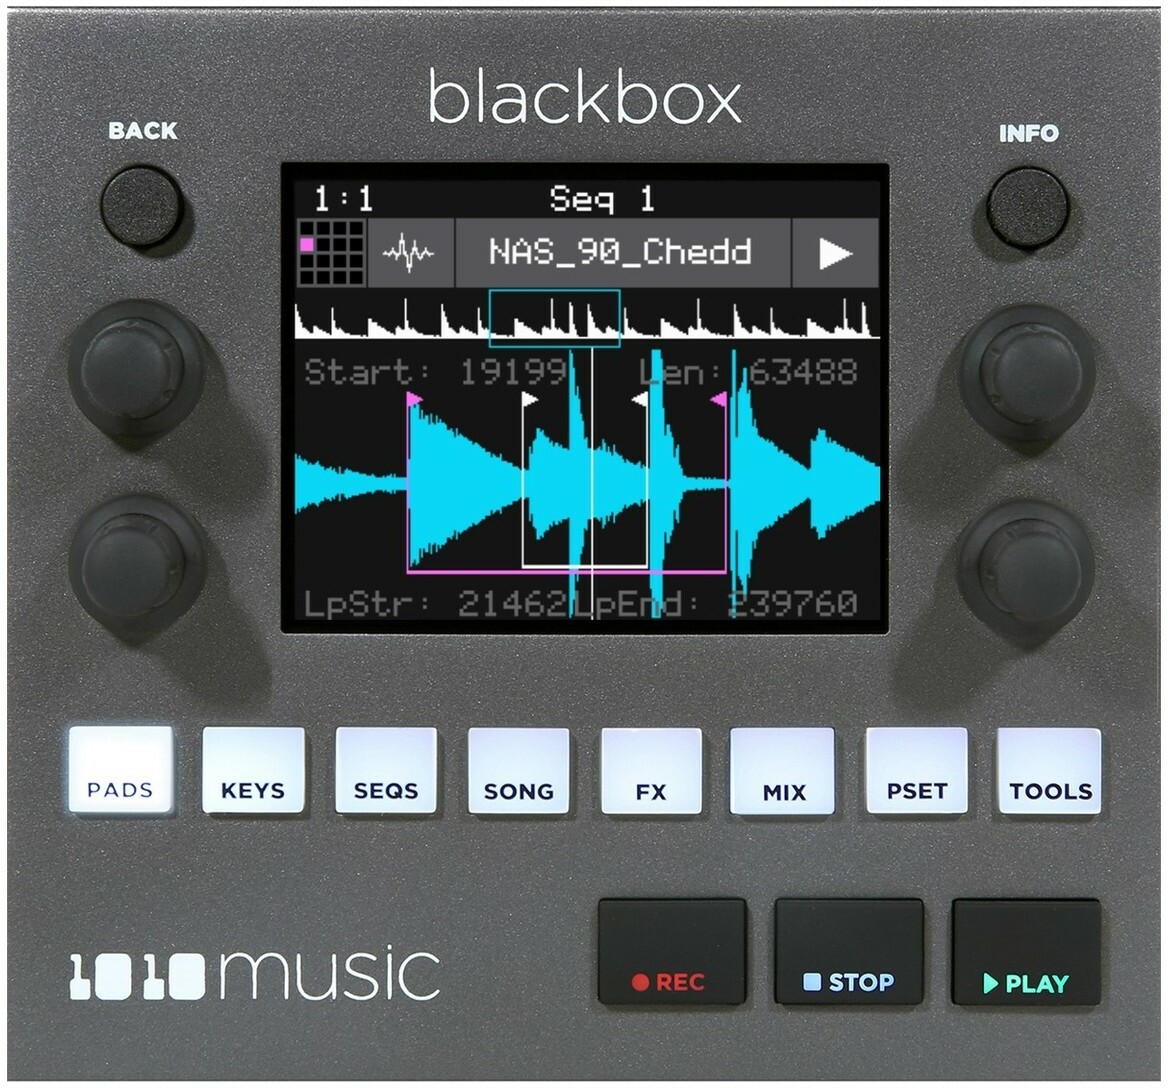 1010music Blackbox - Sampler - Main picture